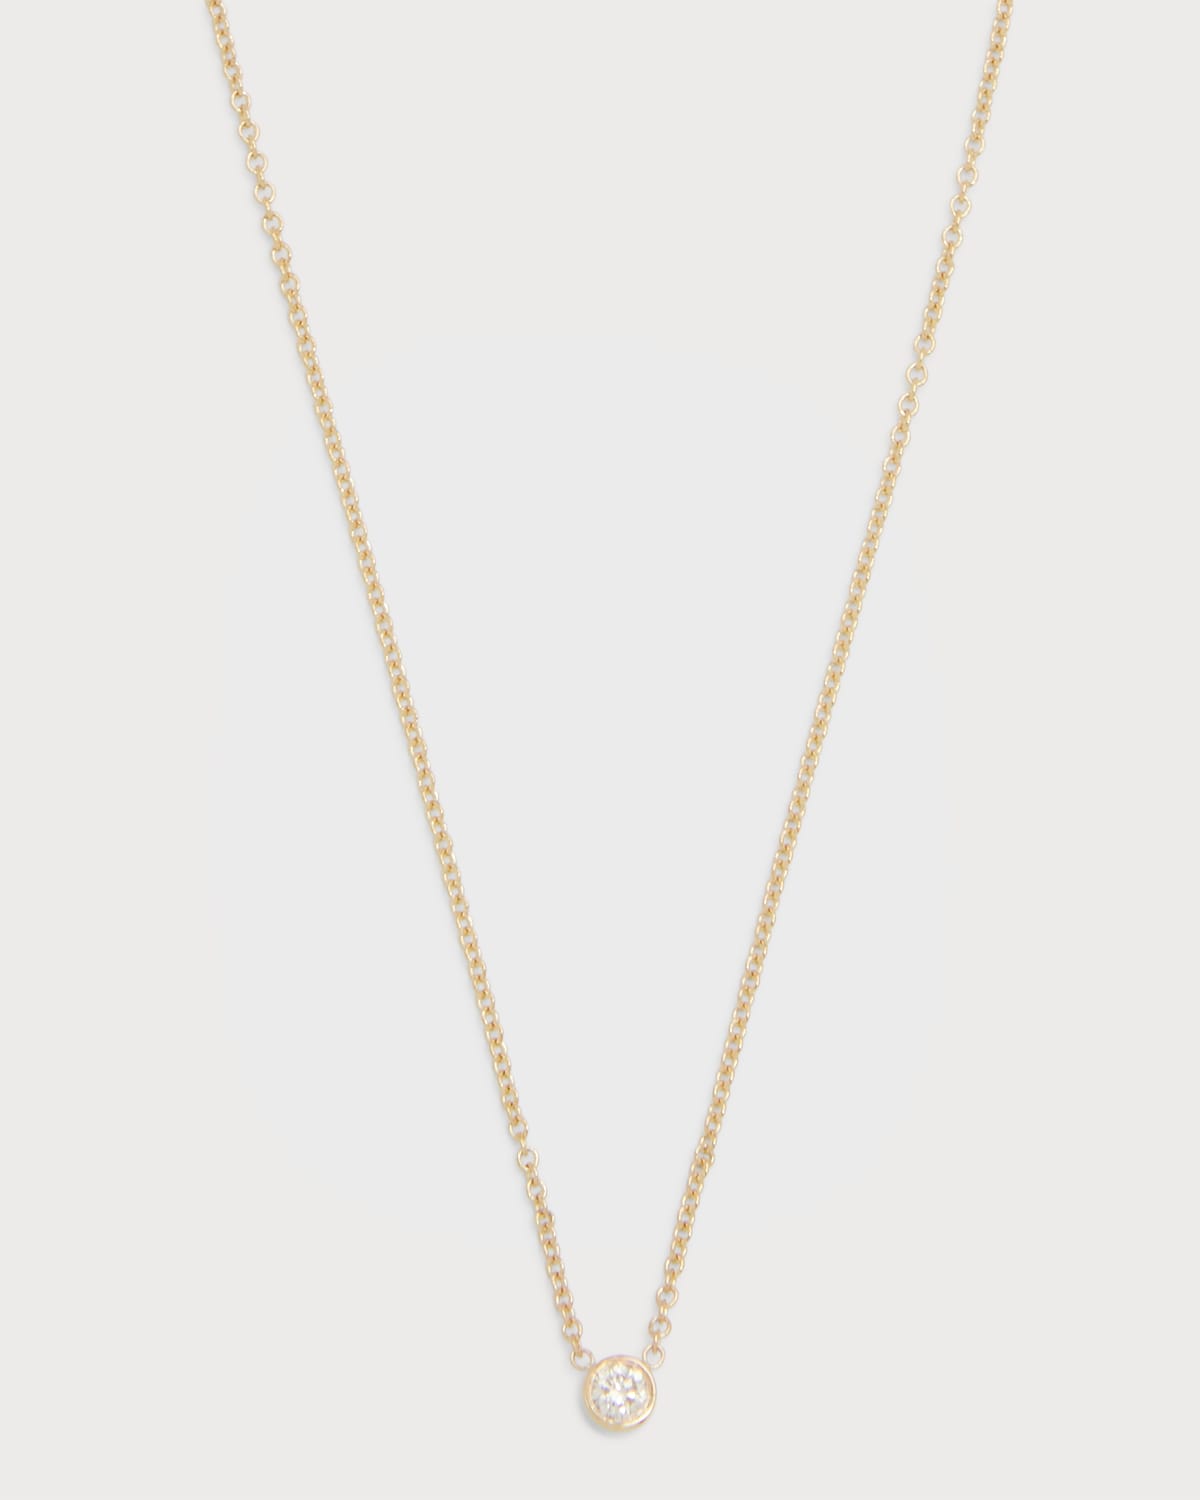 Zoe Lev Jewelry 14k Gold Small Bezel Diamond Necklace